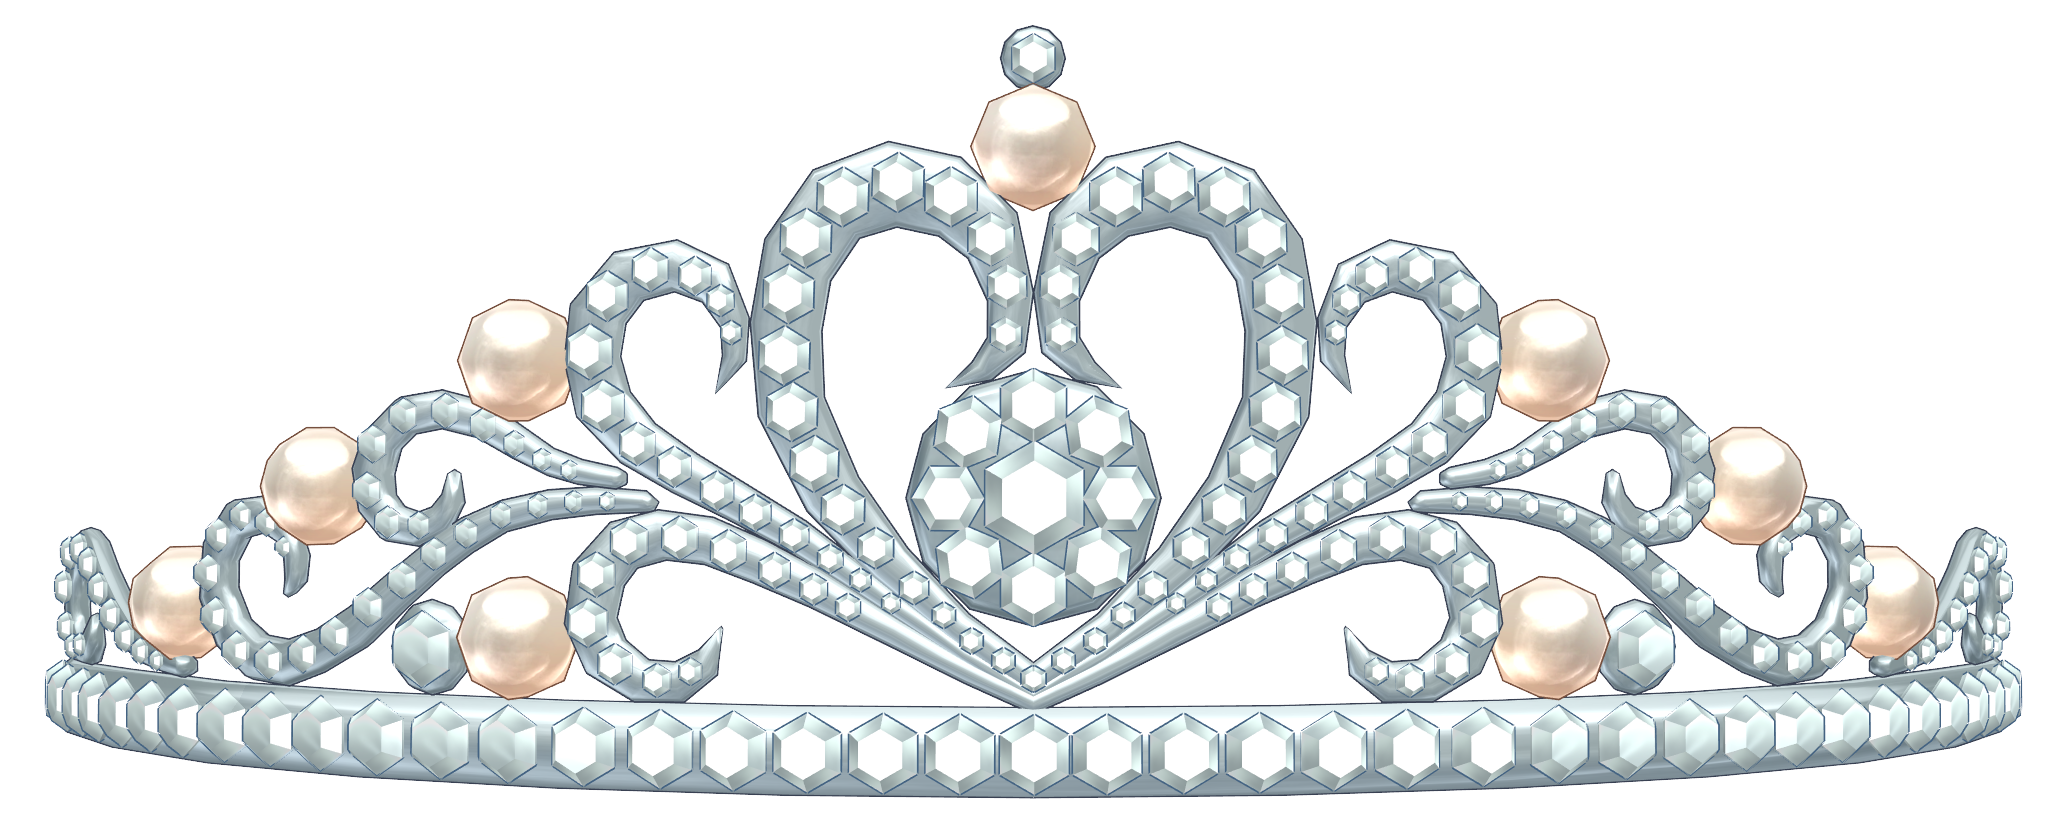 Download PNG image - Silver Princess Crown PNG Transparent Image 